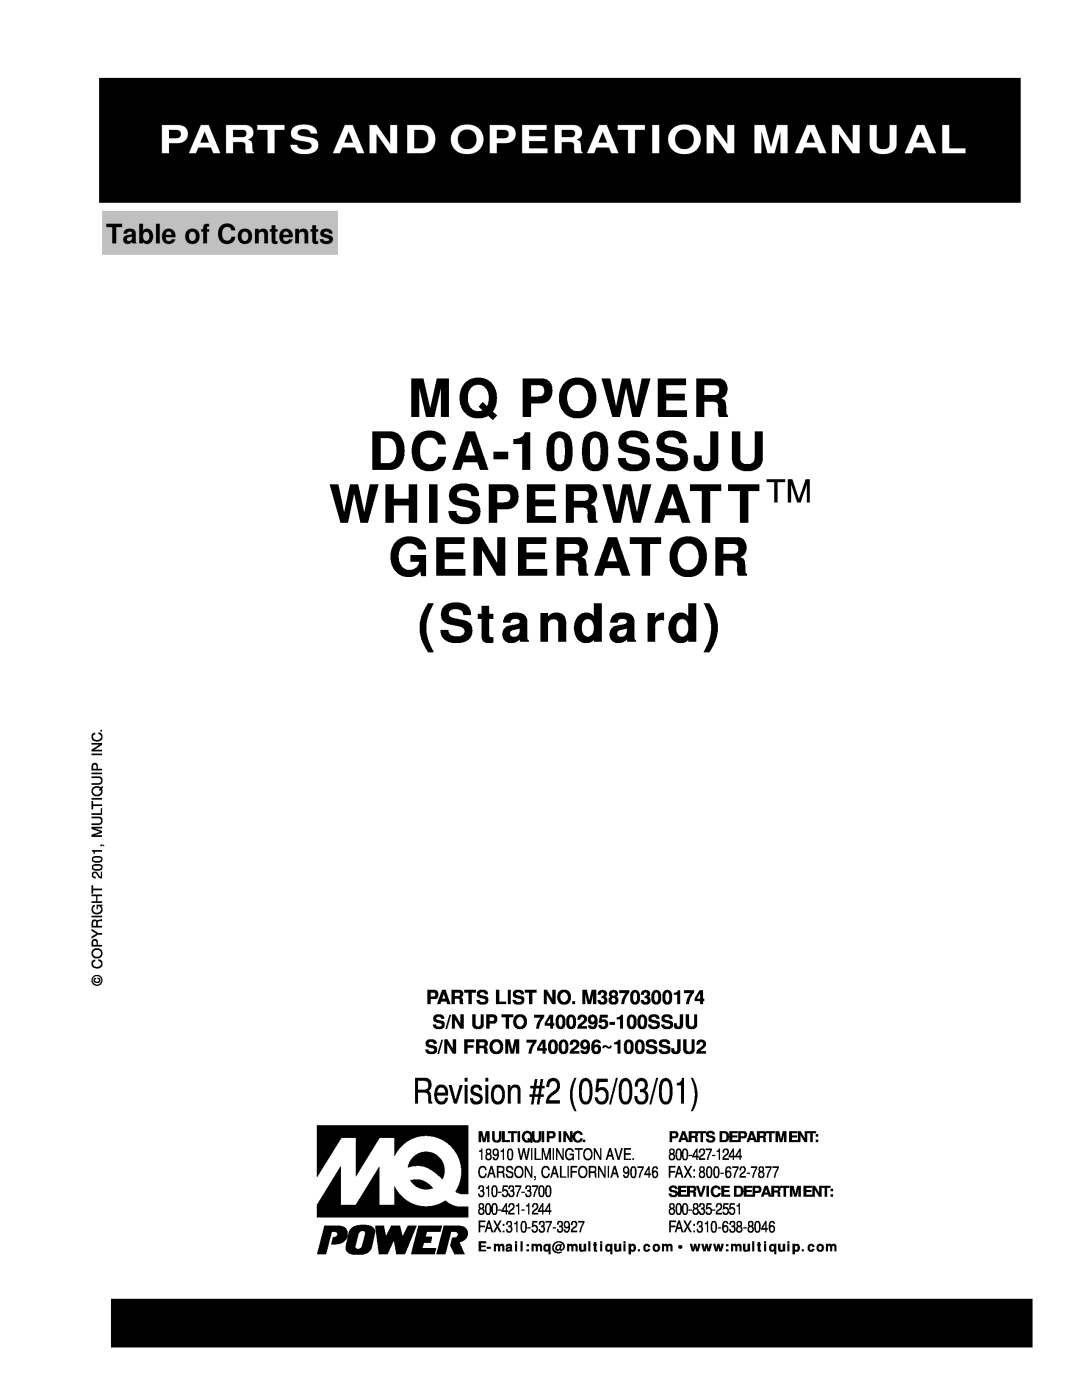 Multiquip operation manual MQ POWER DCA-100SSJU WHISPERWATTTM GENERATOR, Standard, Parts And Operation Manual 